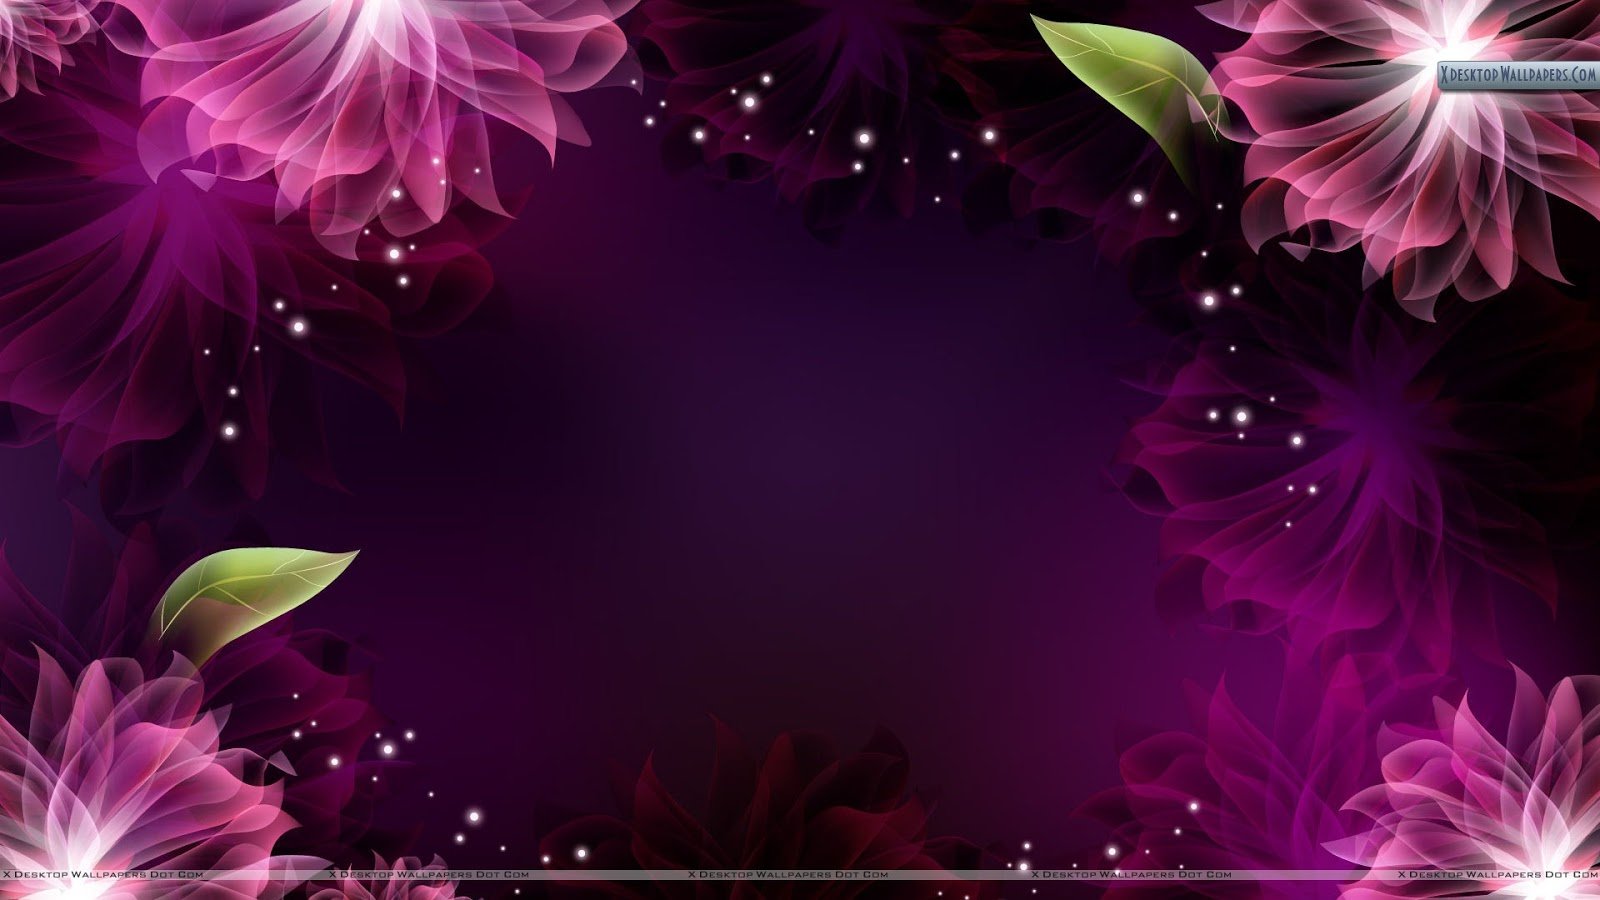  wallpaper Wallpaper Downloads Beautiful Flowers Background 1600x900